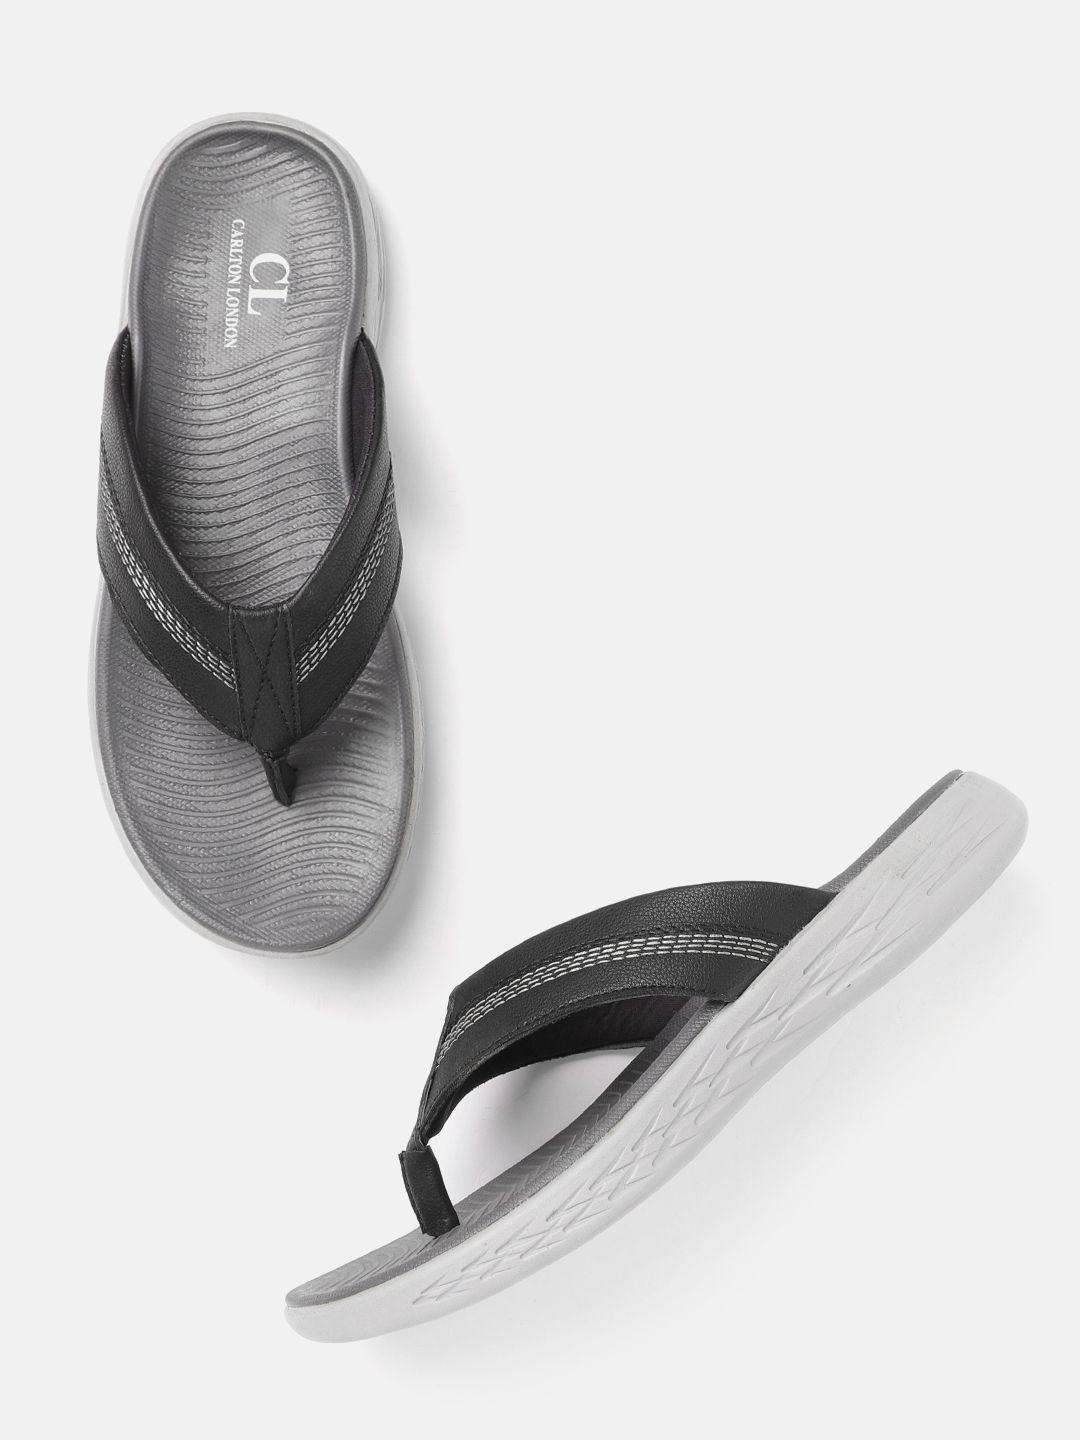 carlton london men black & grey comfort sandals with thread-work